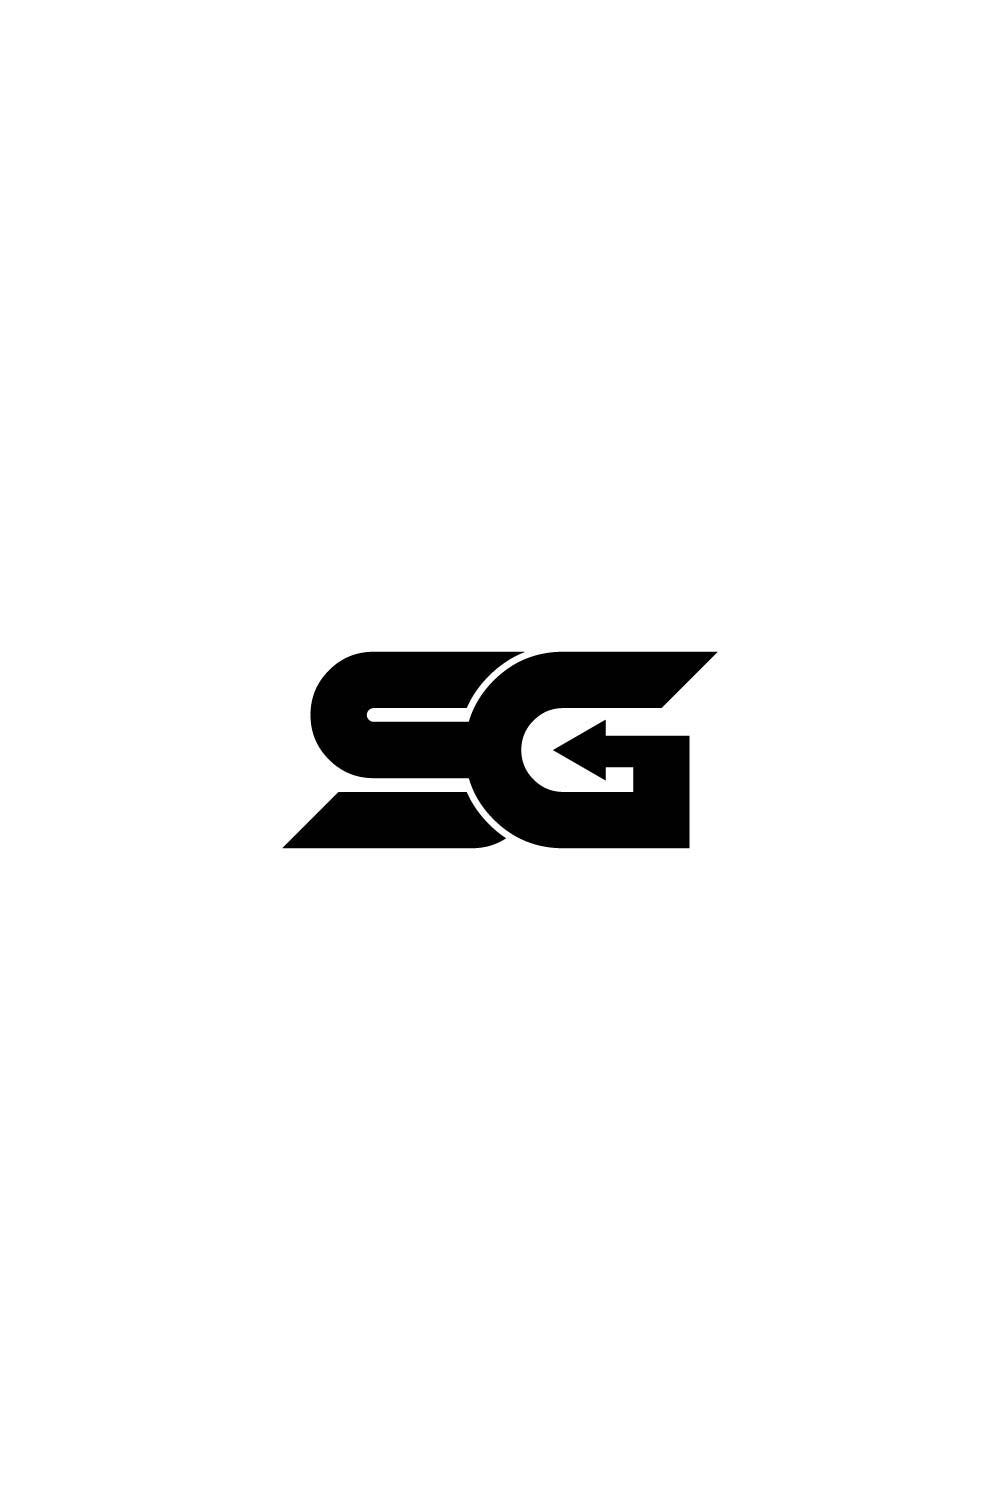 SG logo pinterest preview image.